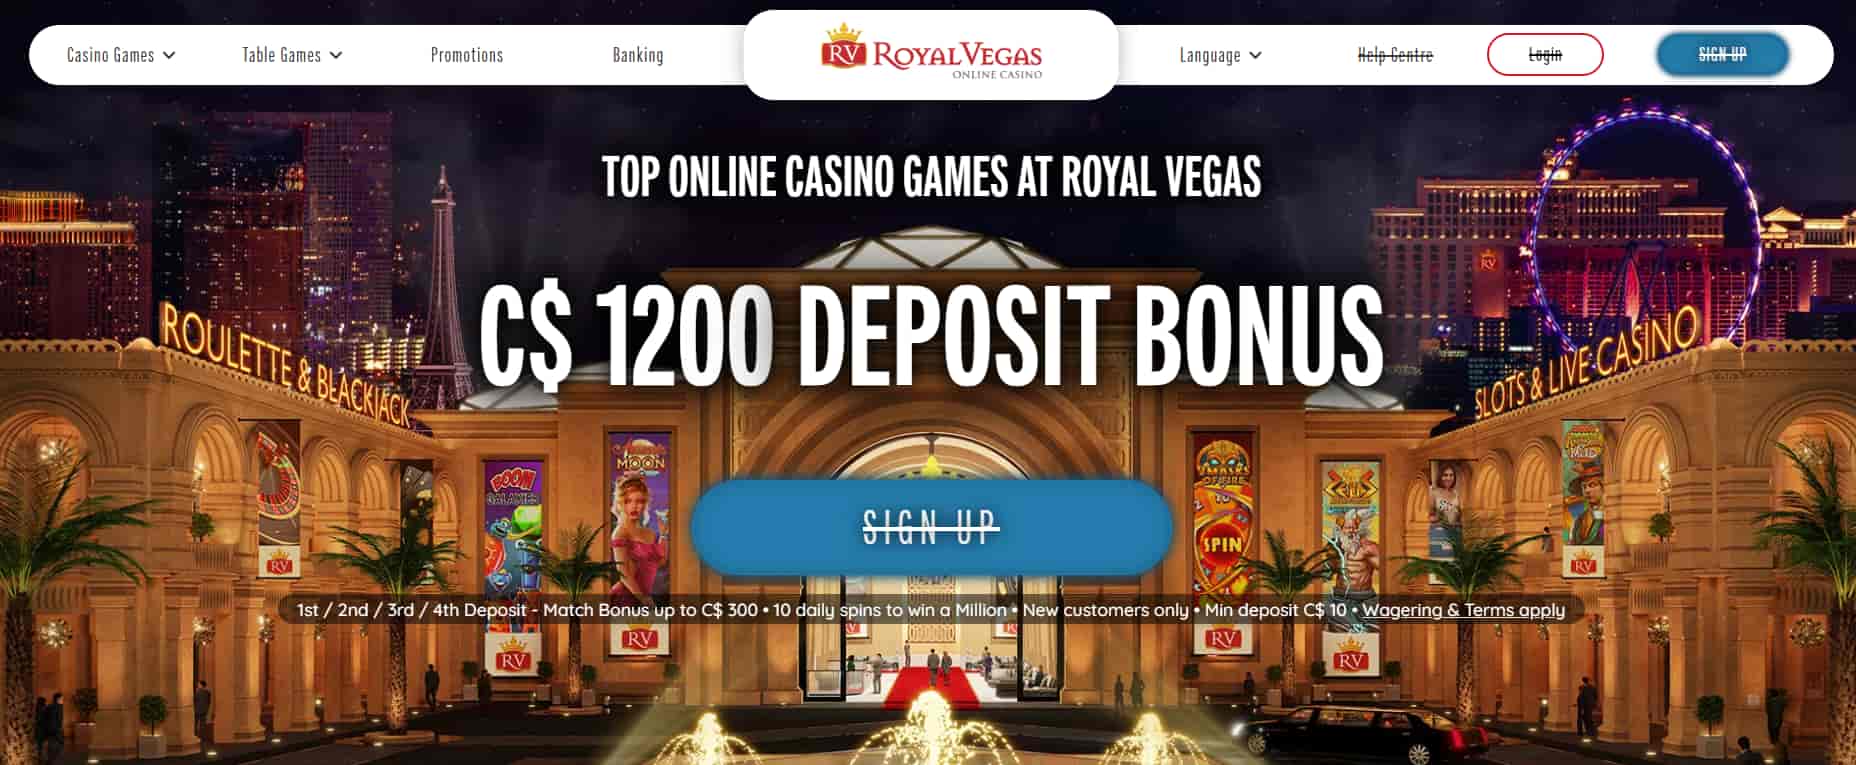 royalvegas casino review